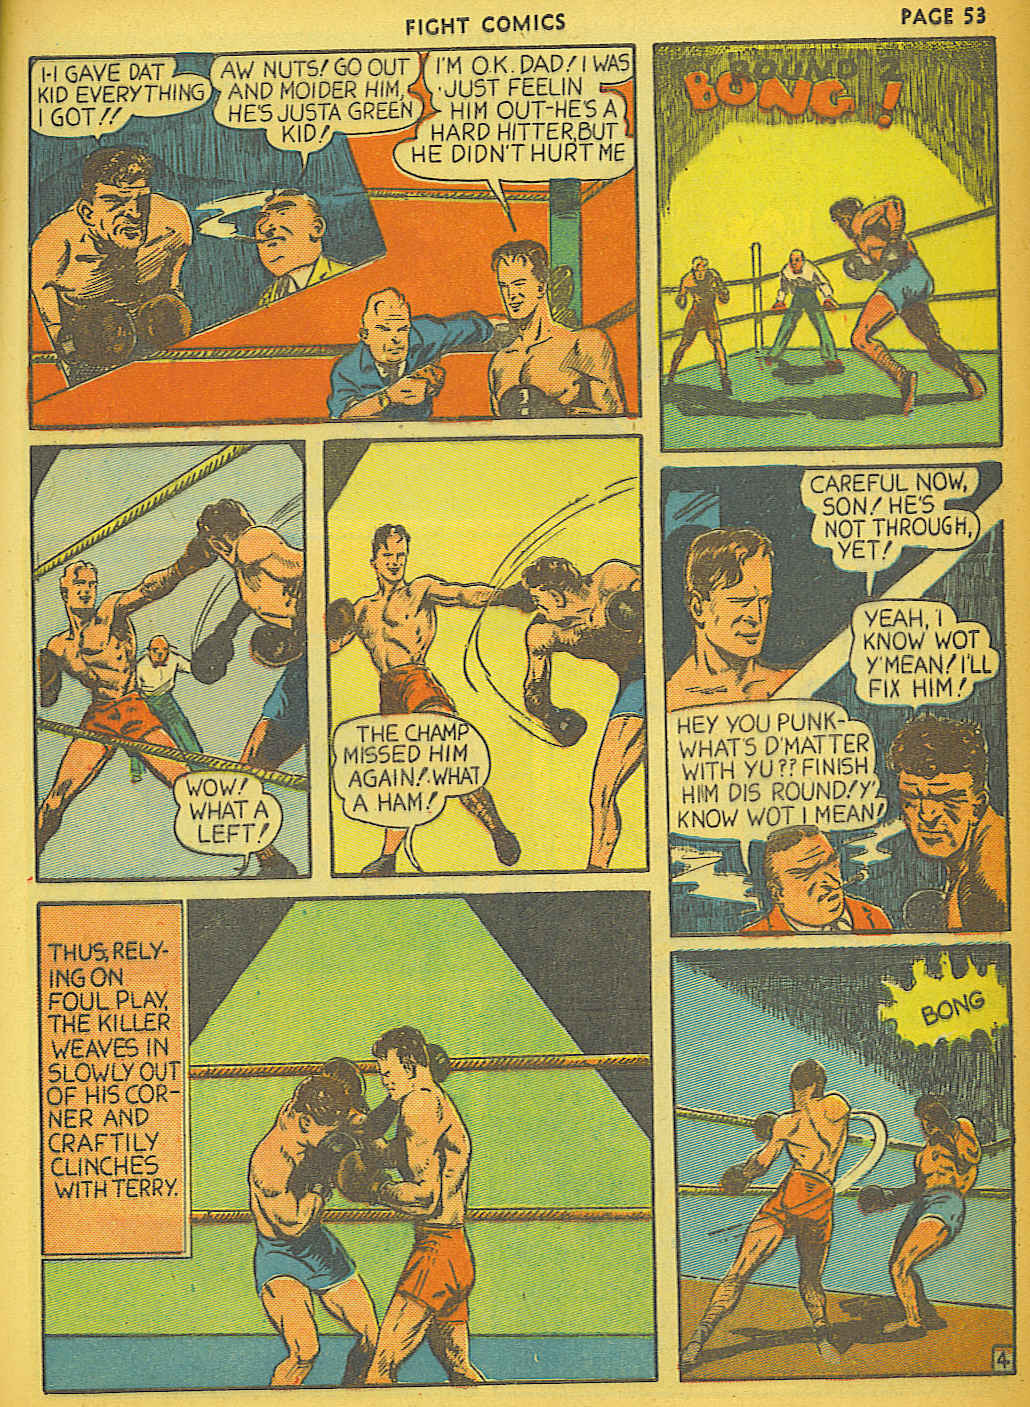 Read online Fight Comics comic -  Issue #2 - 55